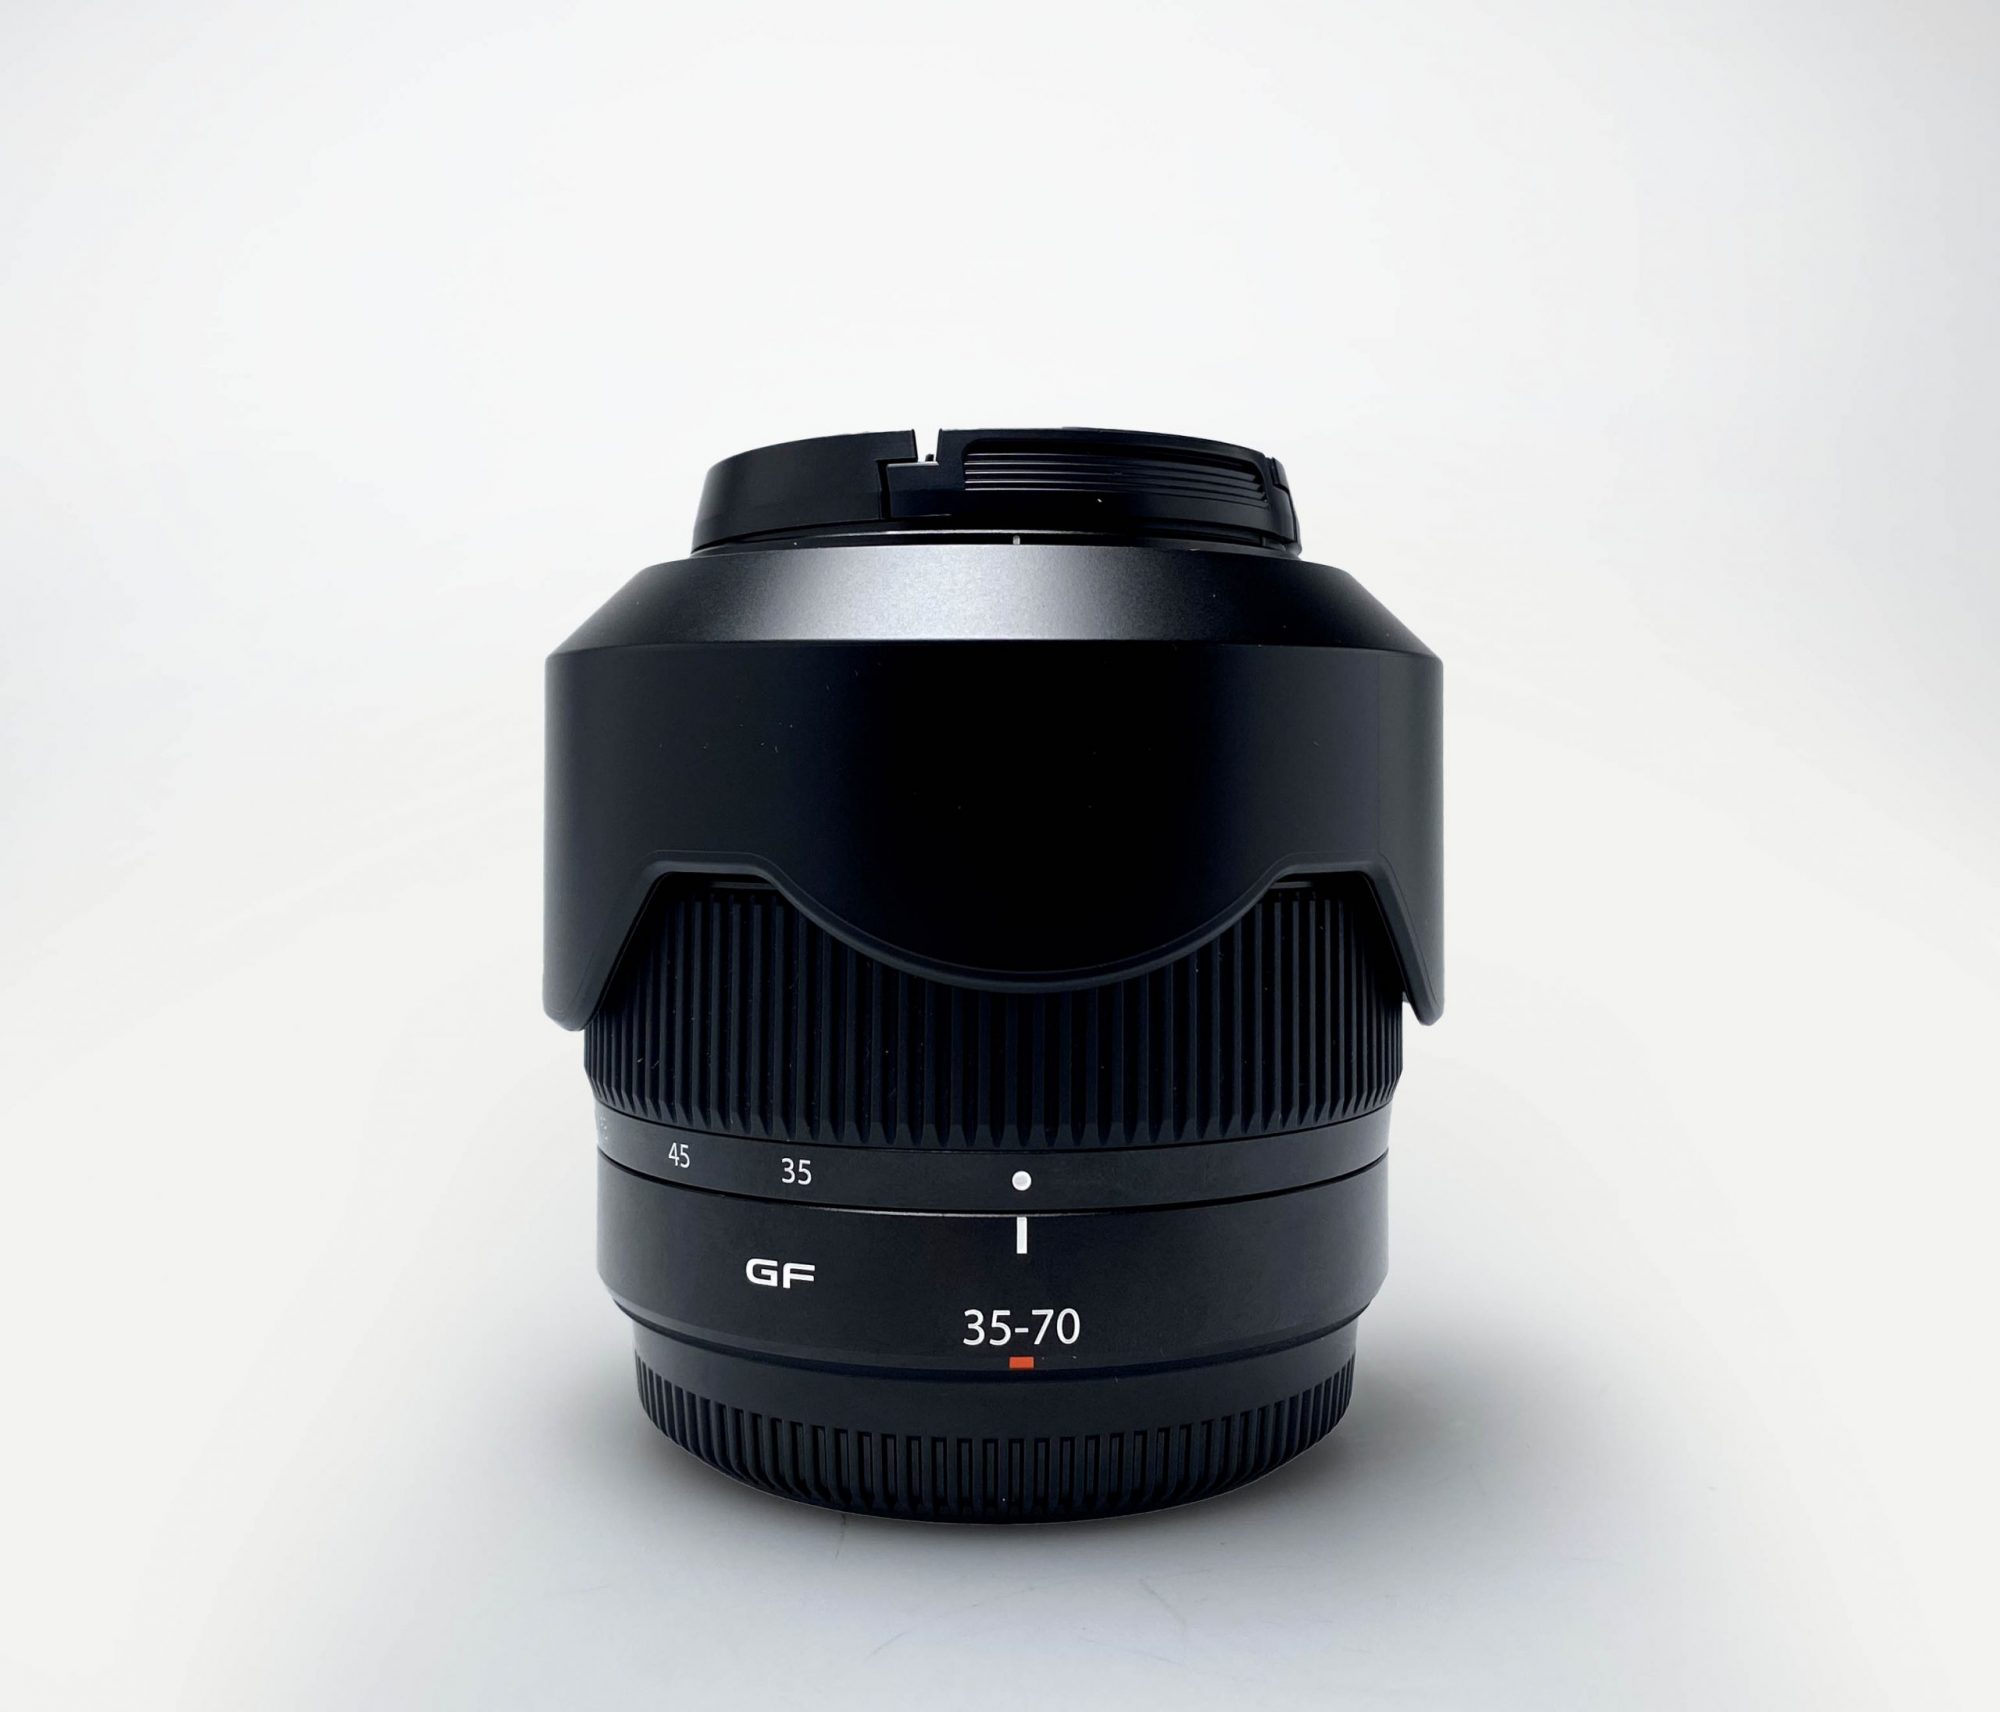 FUJINON GF 35-70mm f/4.5-5.6 WR Lens - First Impressions - Capture 